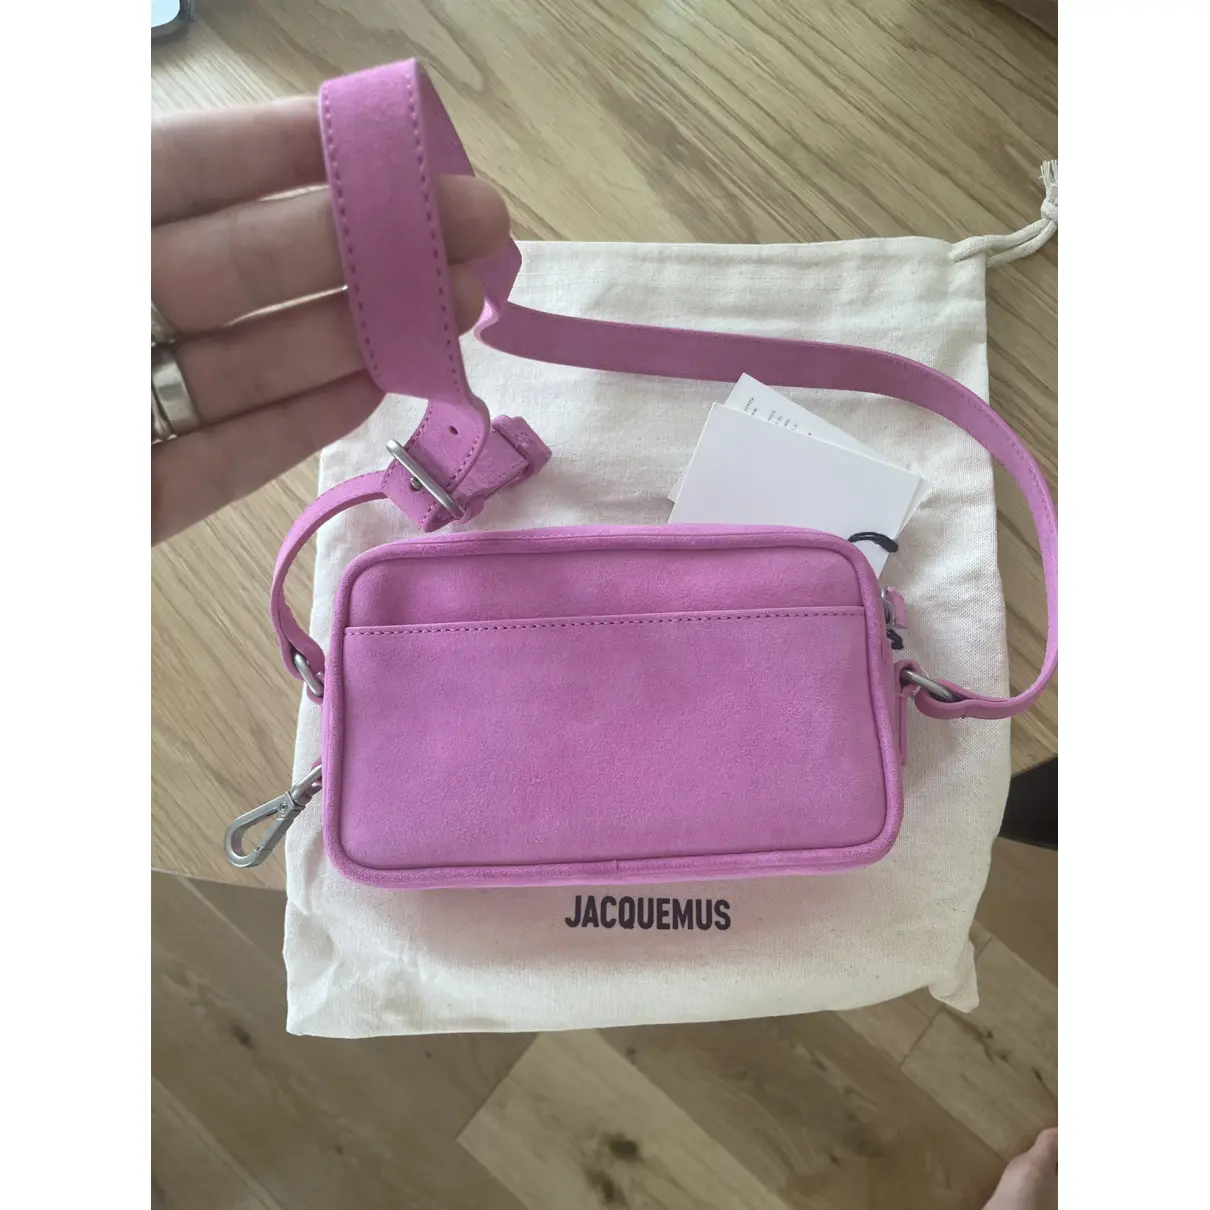 Buy Jacquemus Le Baneto handbag online